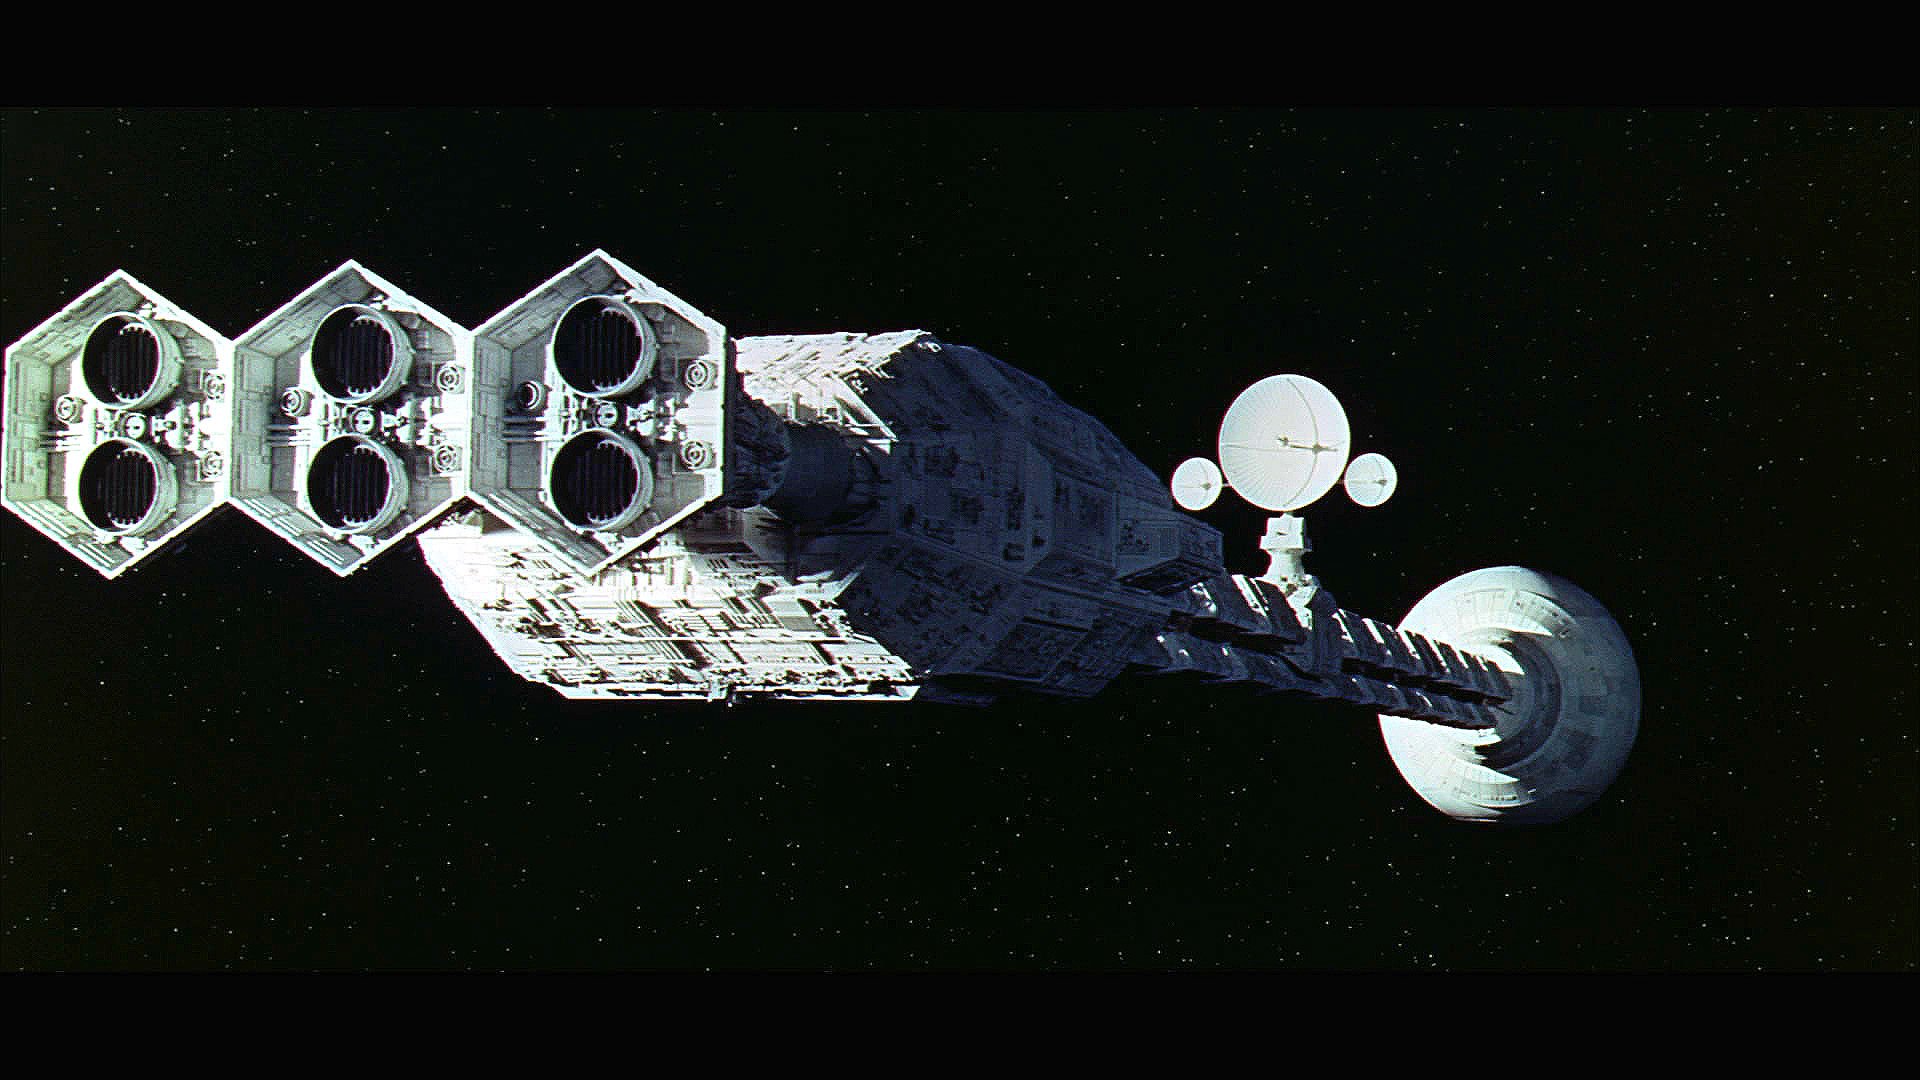 2001, Space, Odyssey, Sci fi, Mystery, Futuristic, Spaceship Wallpaper